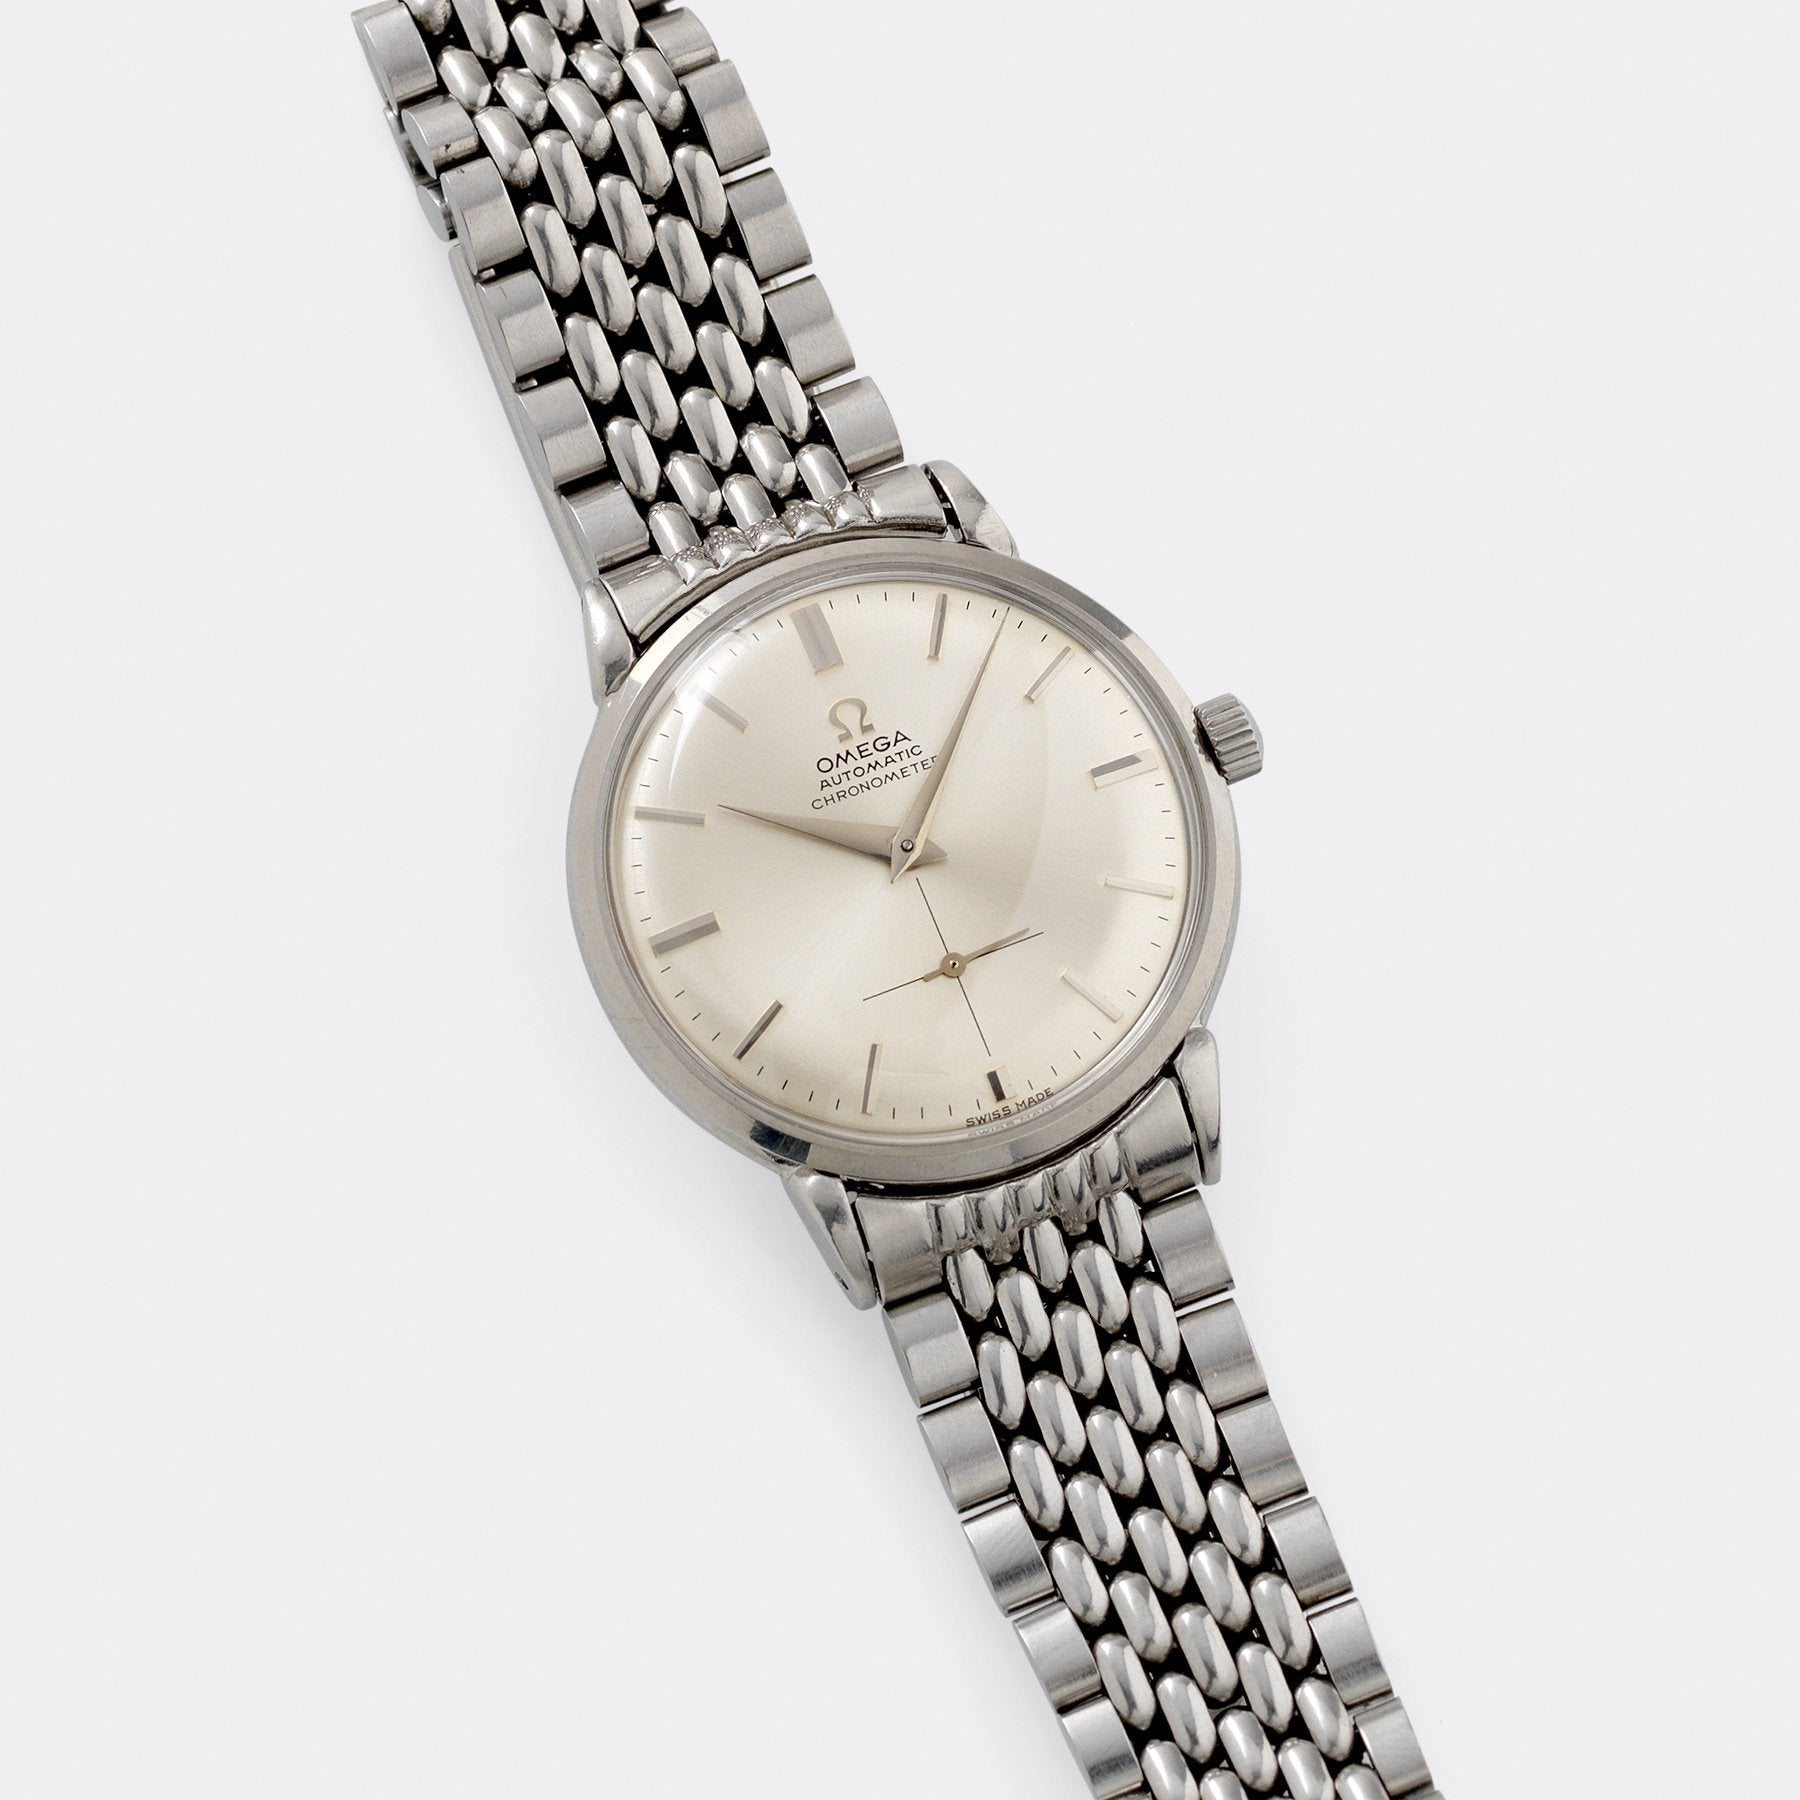 Omega Chronometer Reference 2398 Dress Watch